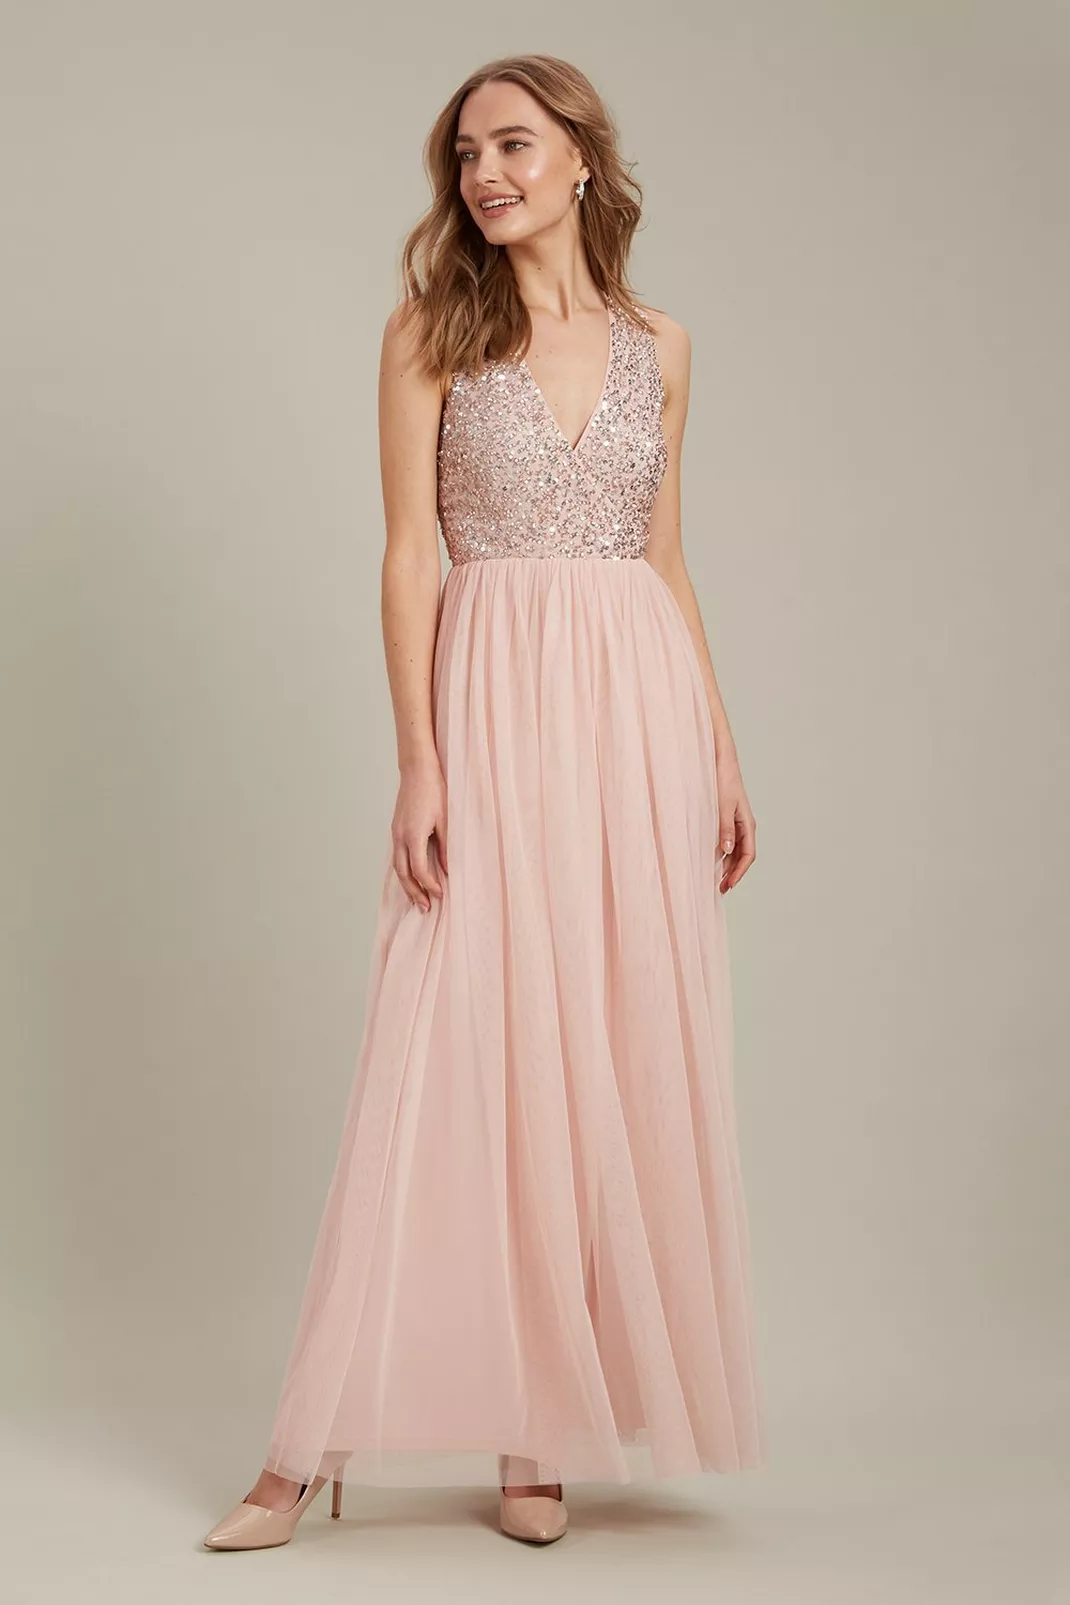 dorothy perkins embellished v neck tulle maxi bridesmaid dress blush pink